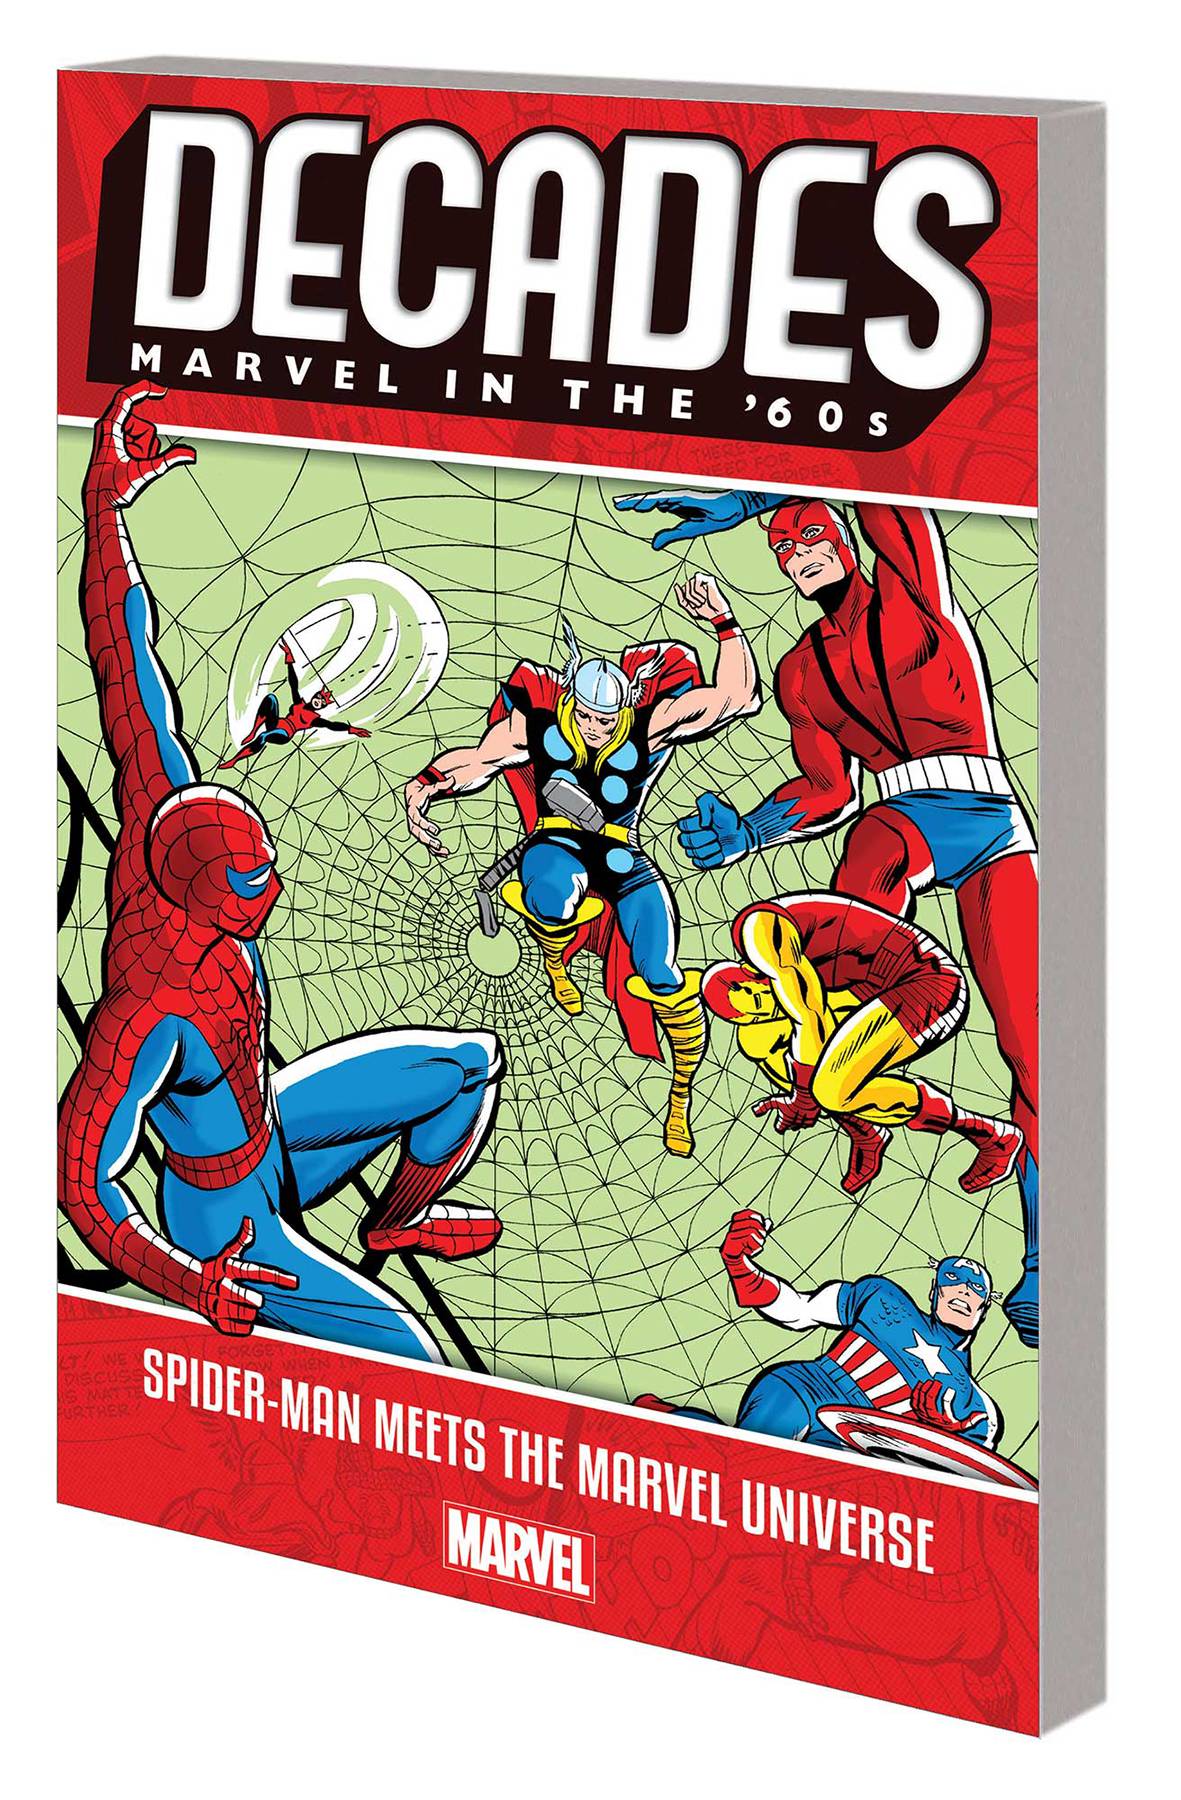 Decades Marvel 60's Graphic Novel Spider-Man Meets Marvel Universe